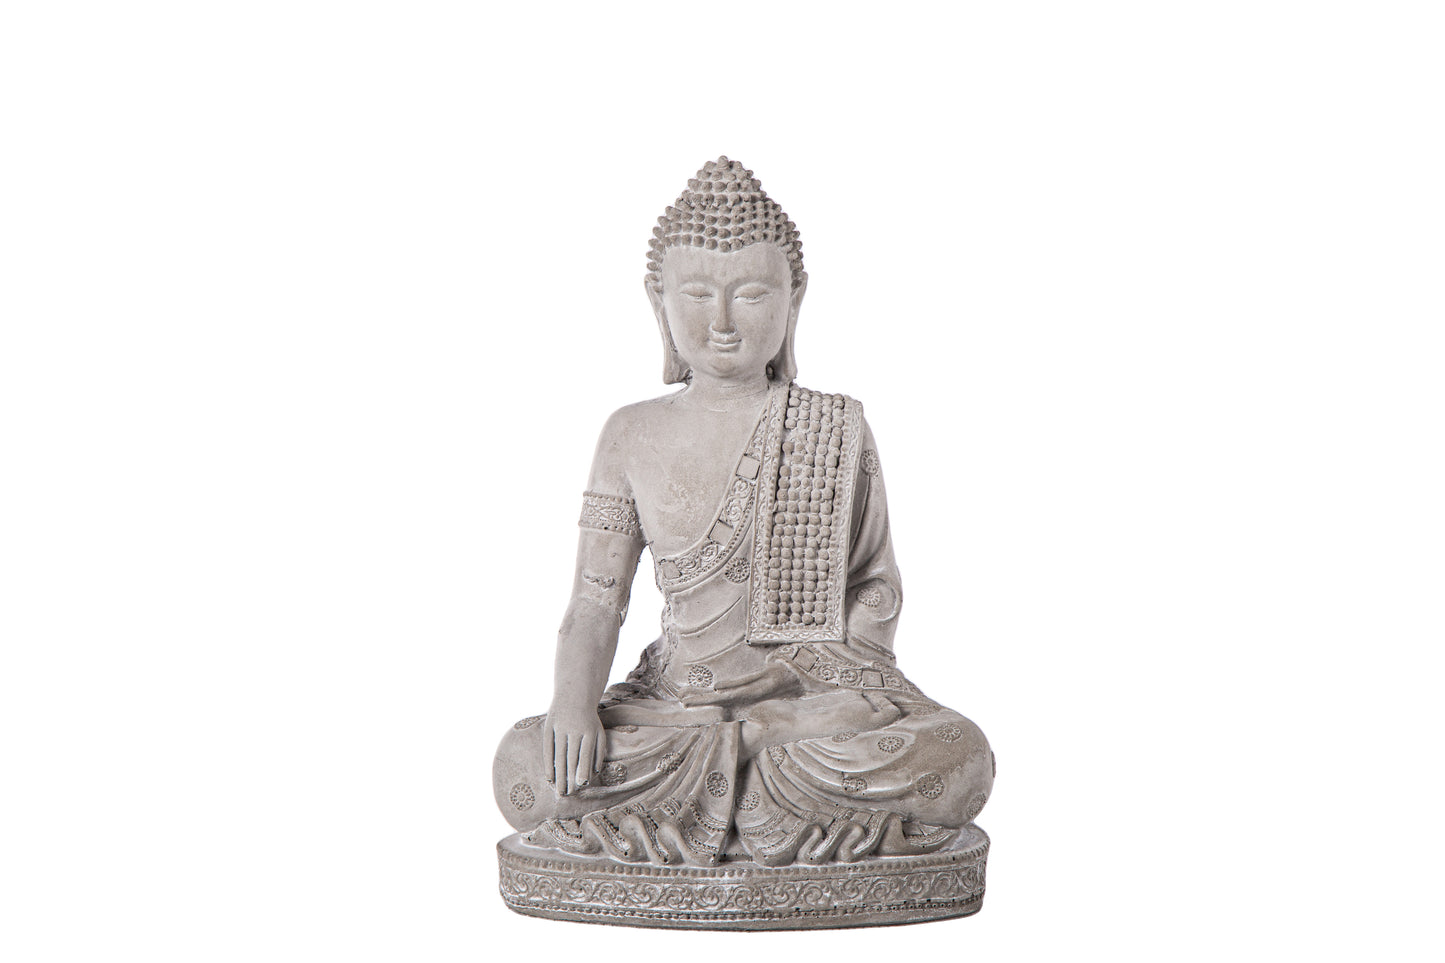 10" Cement Meditating Buddha Figurine in Bhumisparsha Mudra Position